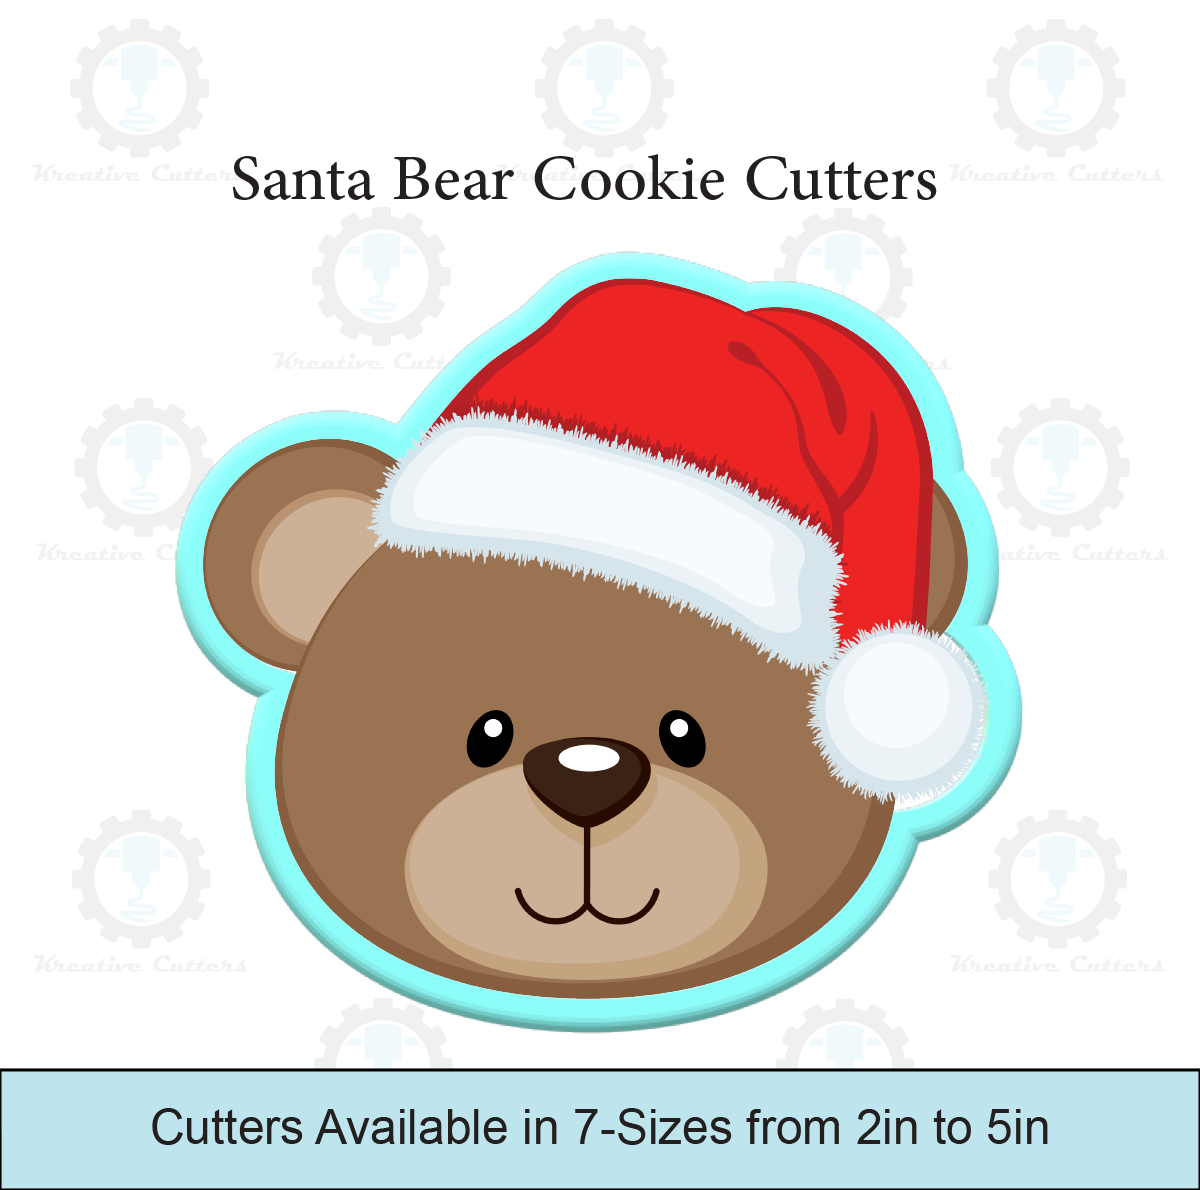 Santa Bear Cookie Cutters